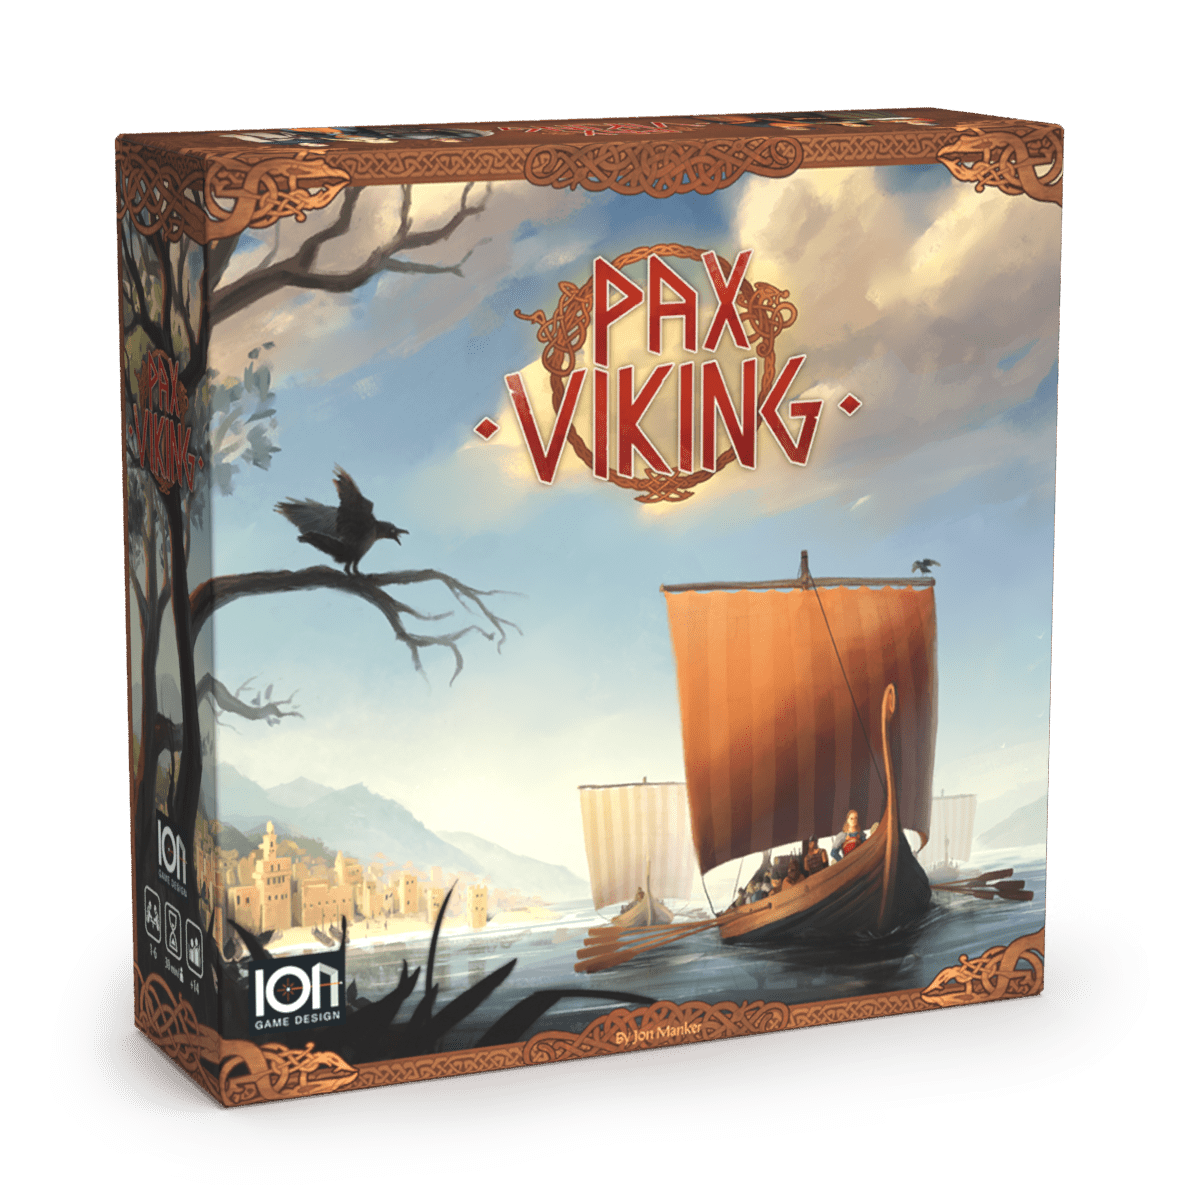 PAX Viking Board Game - 3D box cover design